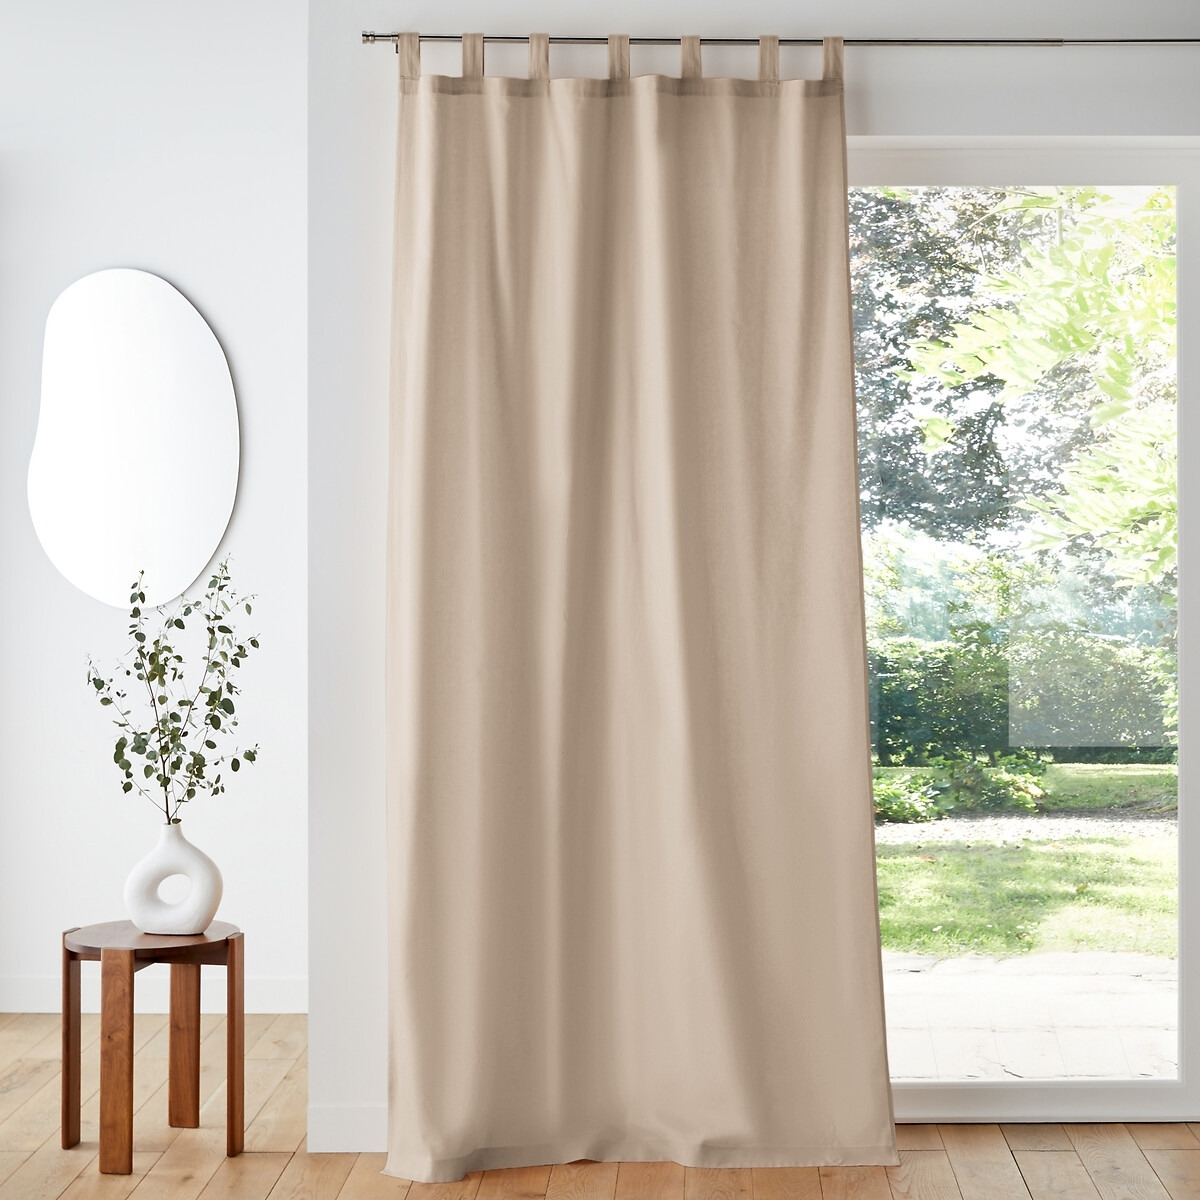 Scenario Cotton Tab Top Curtain Panel - image 1